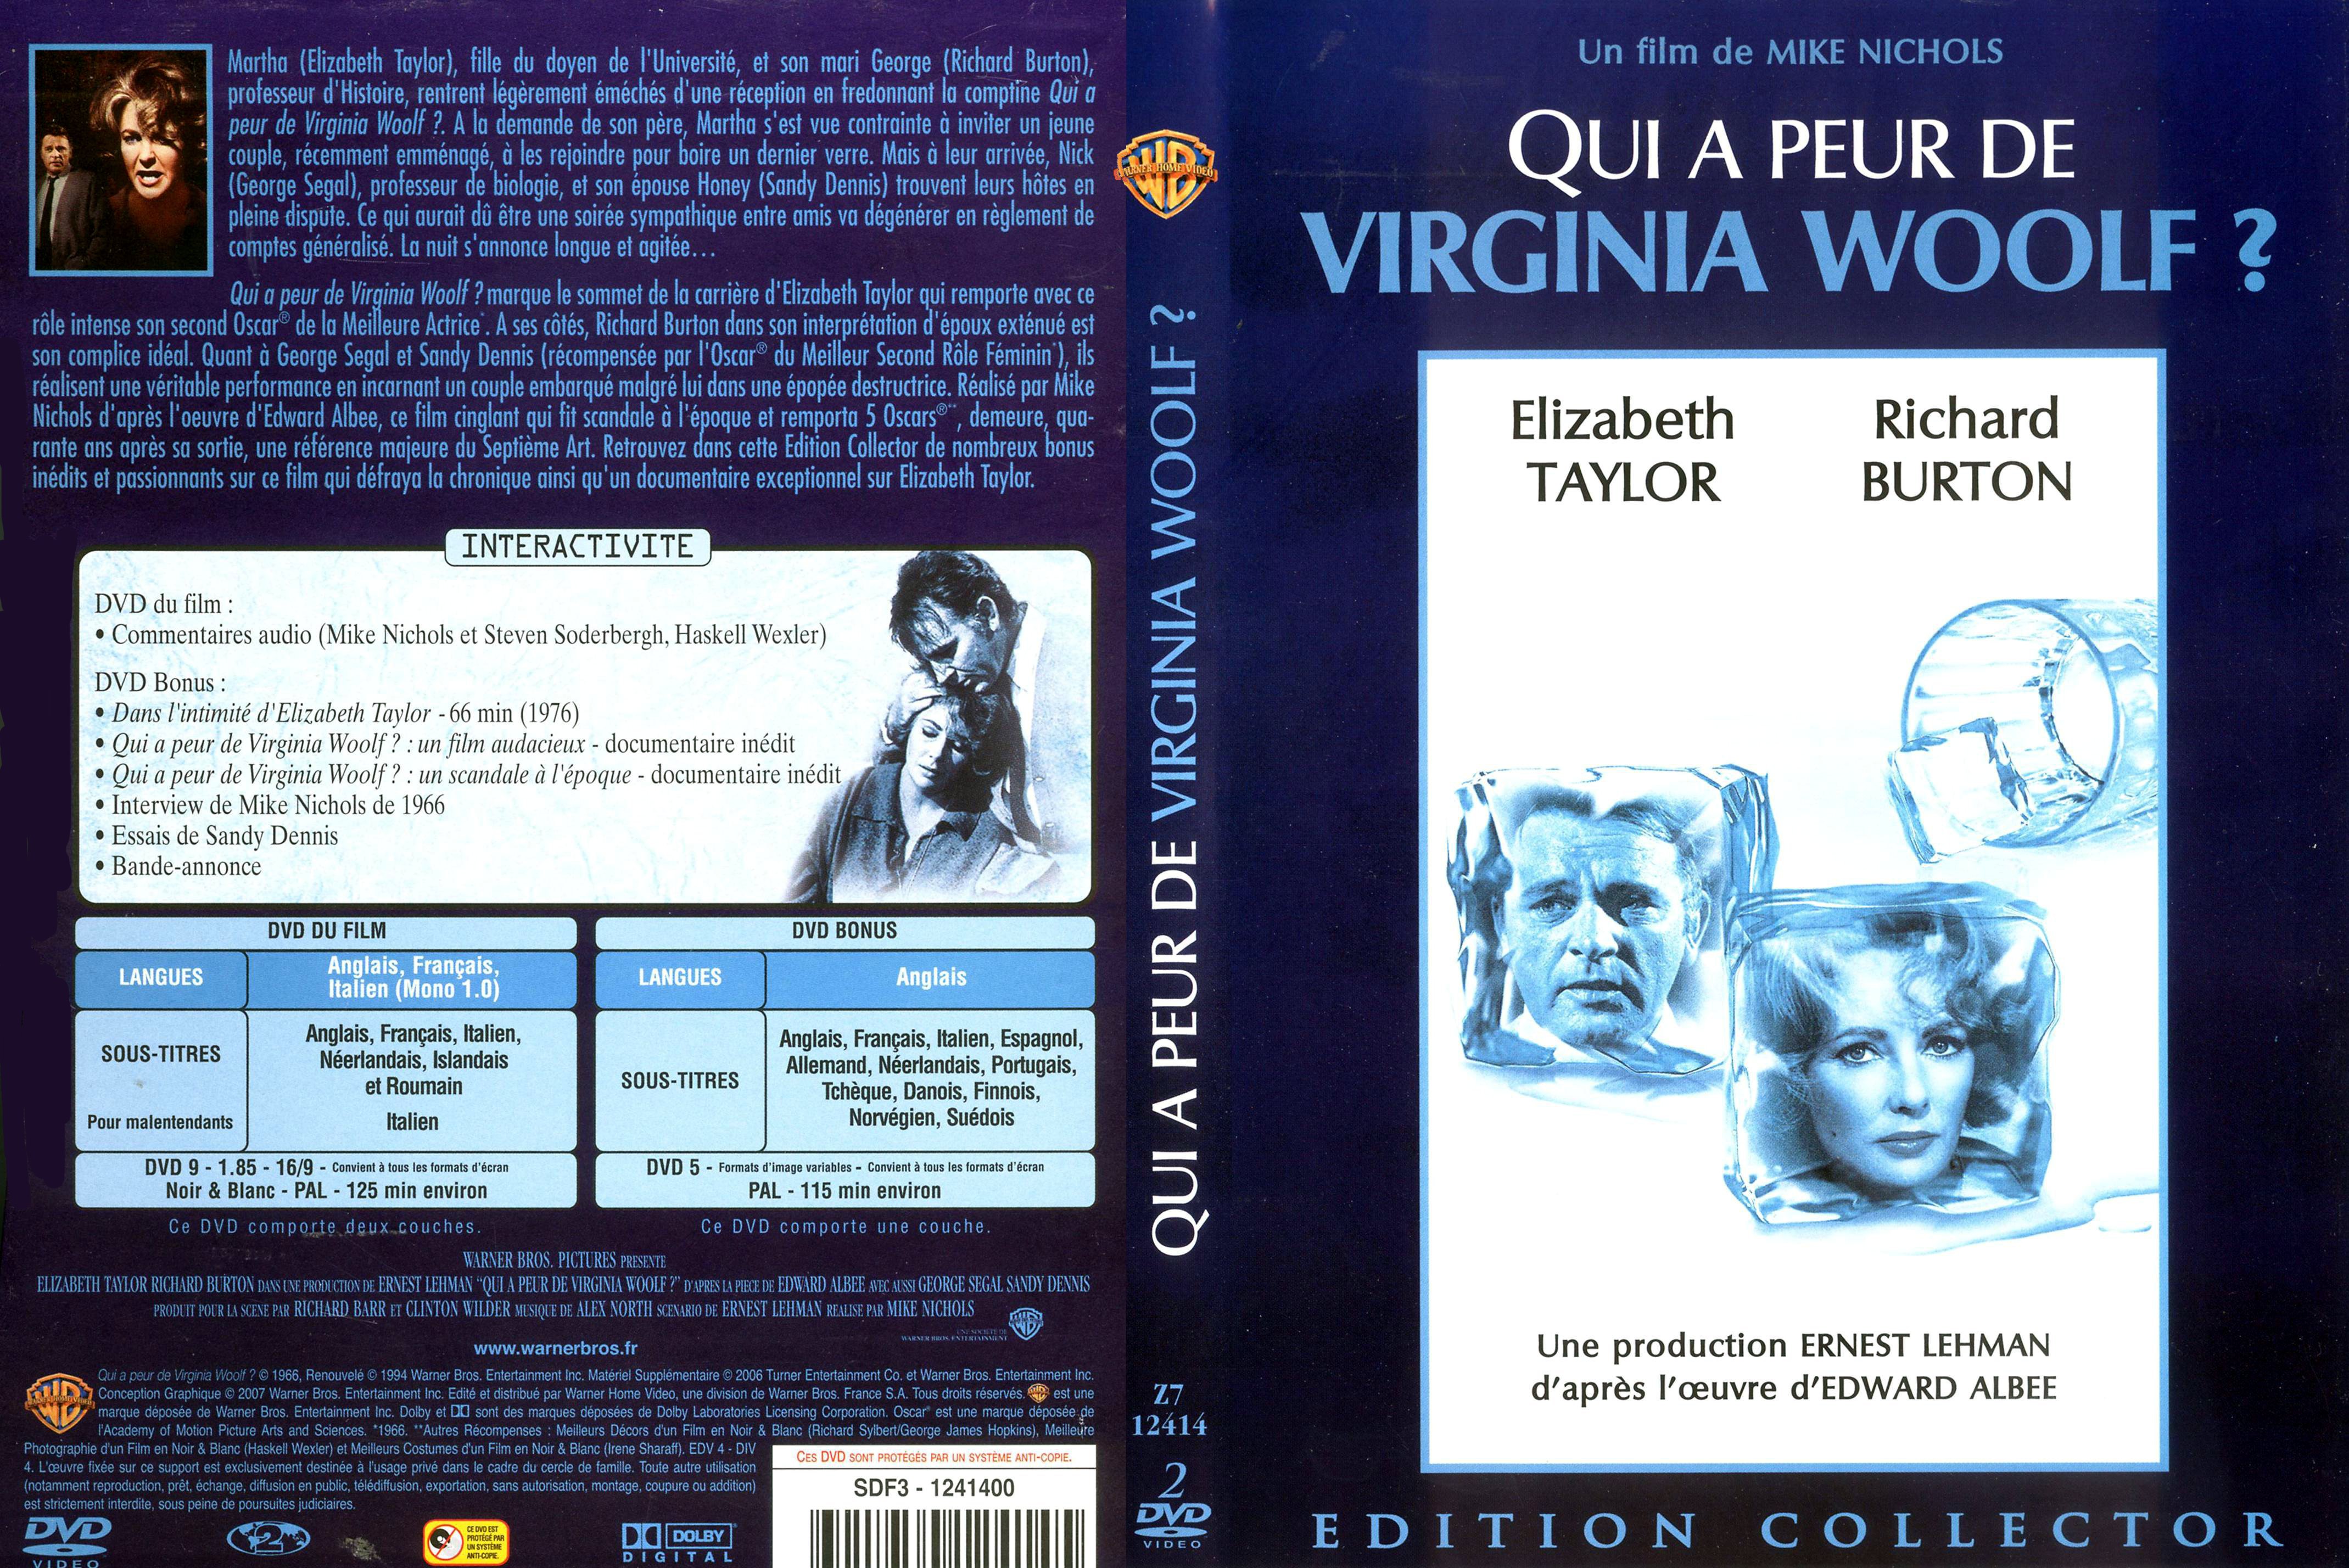 Jaquette DVD Qui a peur de Virginia Woolf v2